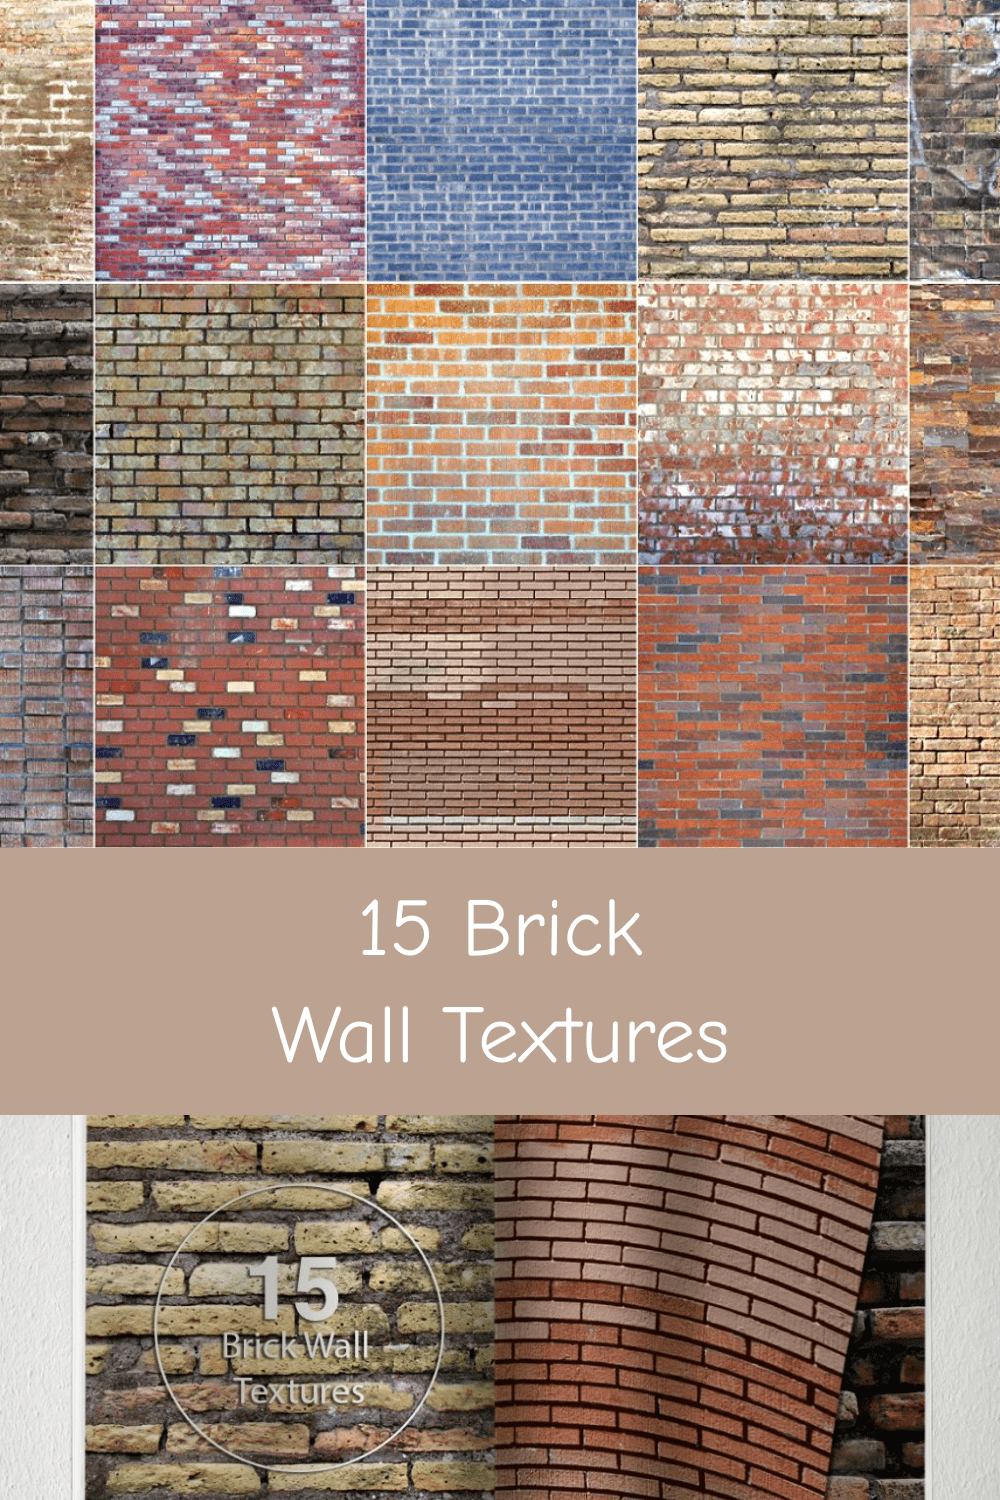 15 Brick Wall Textures.